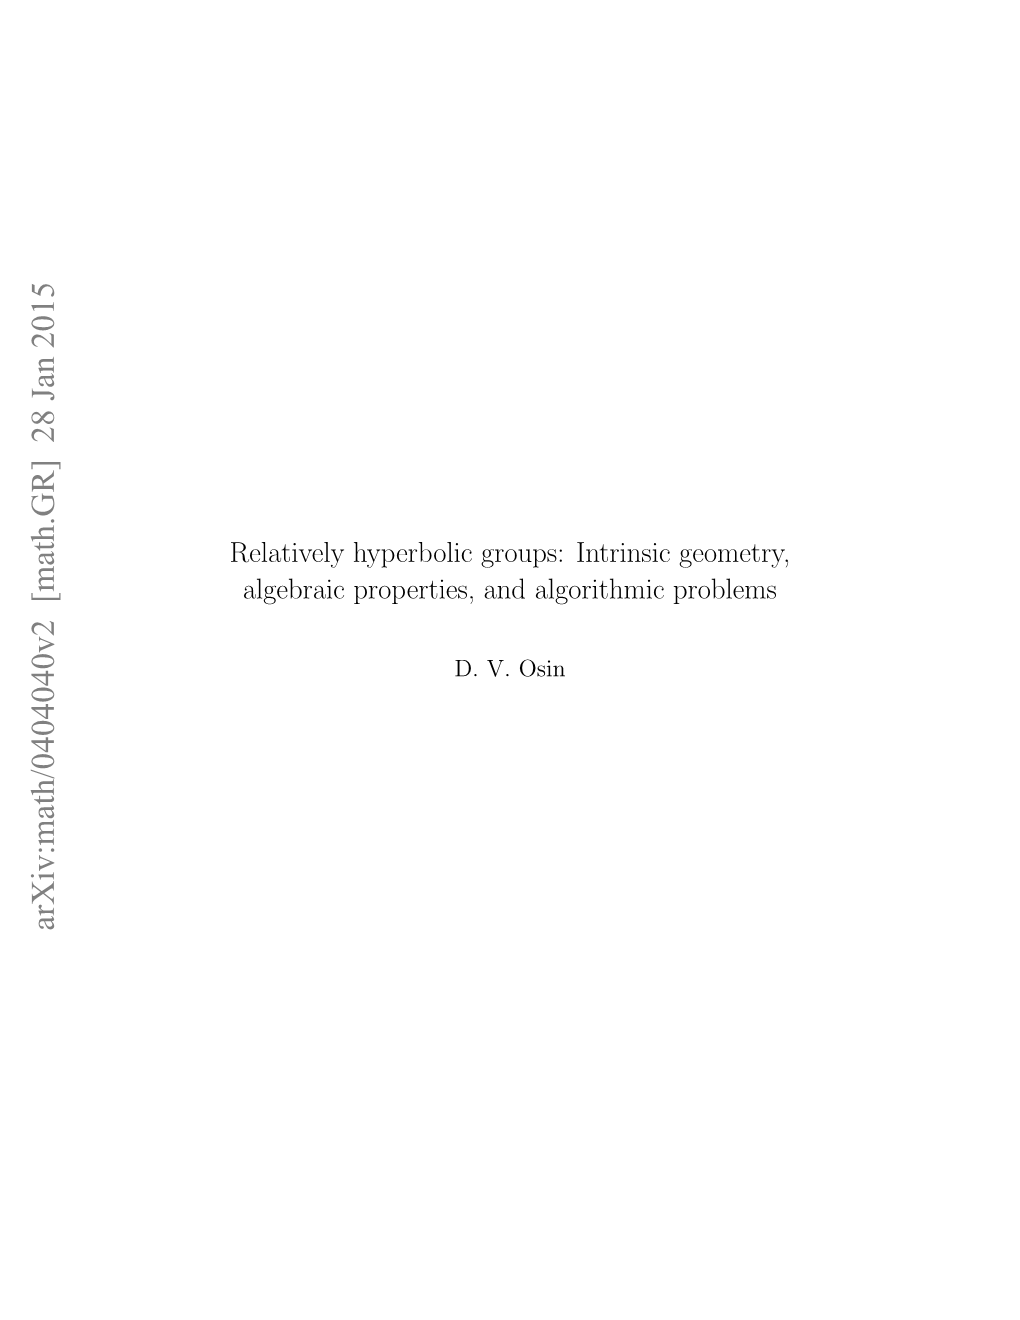 Relatively Hyperbolic Groups: Intrinsic Geometry, Algebraic Properties, And